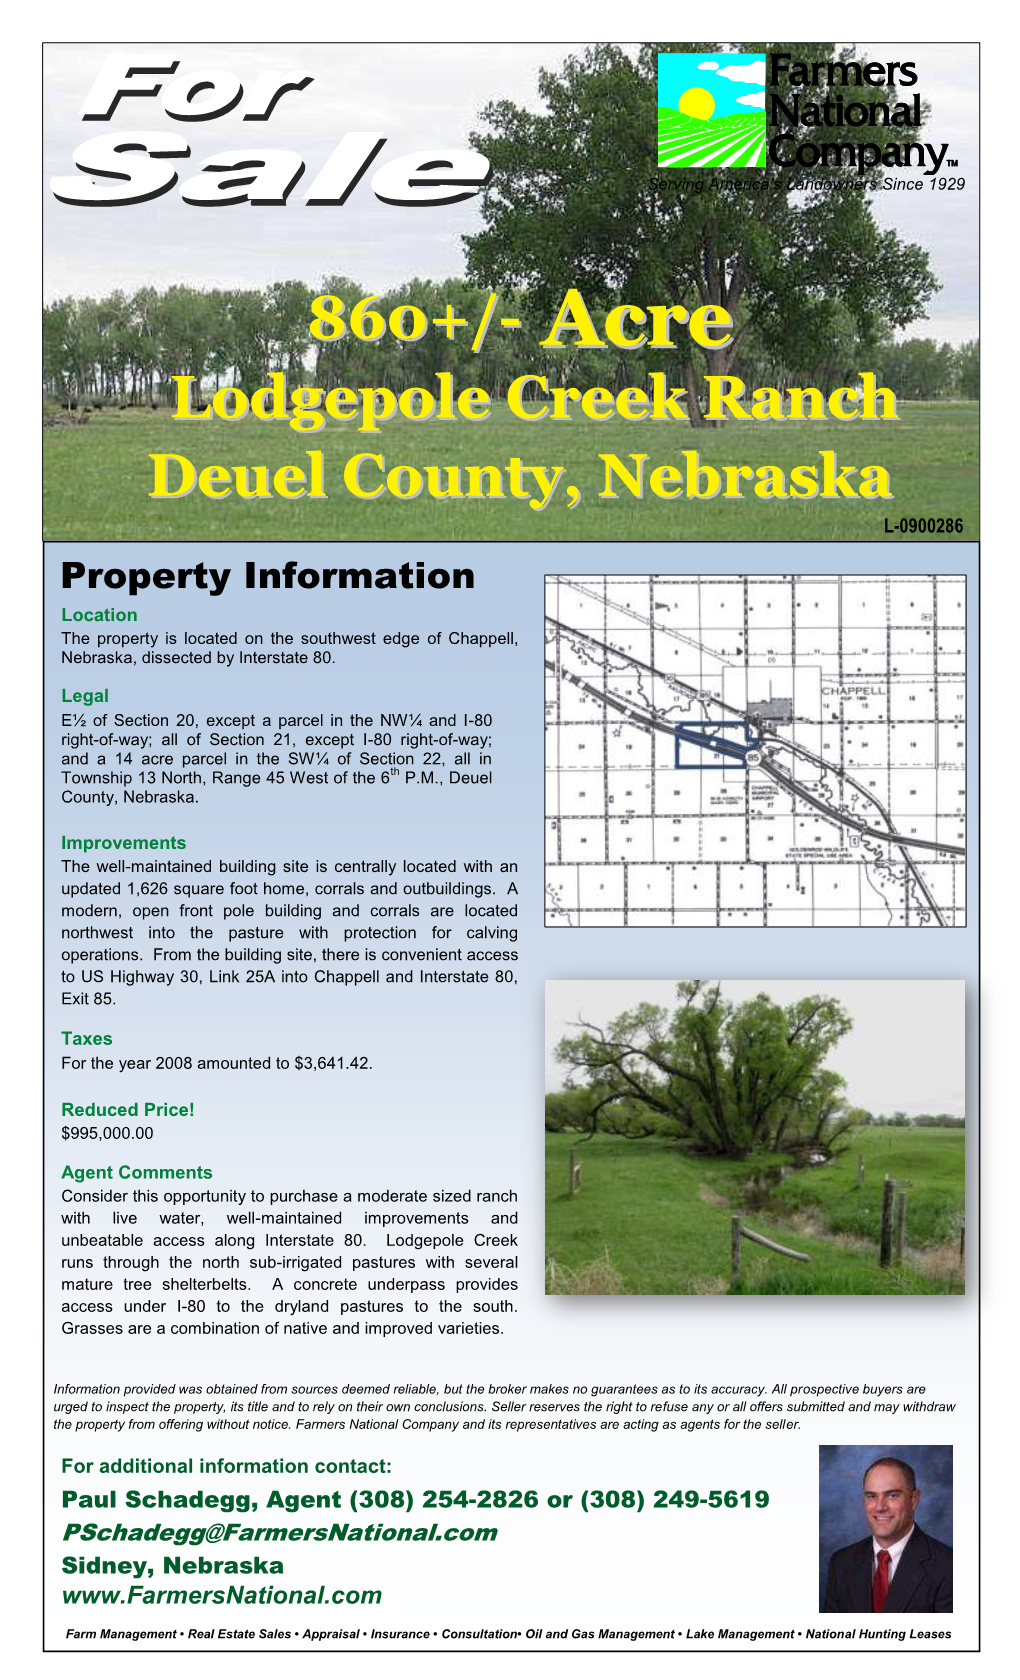 860+/- Lodgepole Creek Ranch Deuel County, Nebraska